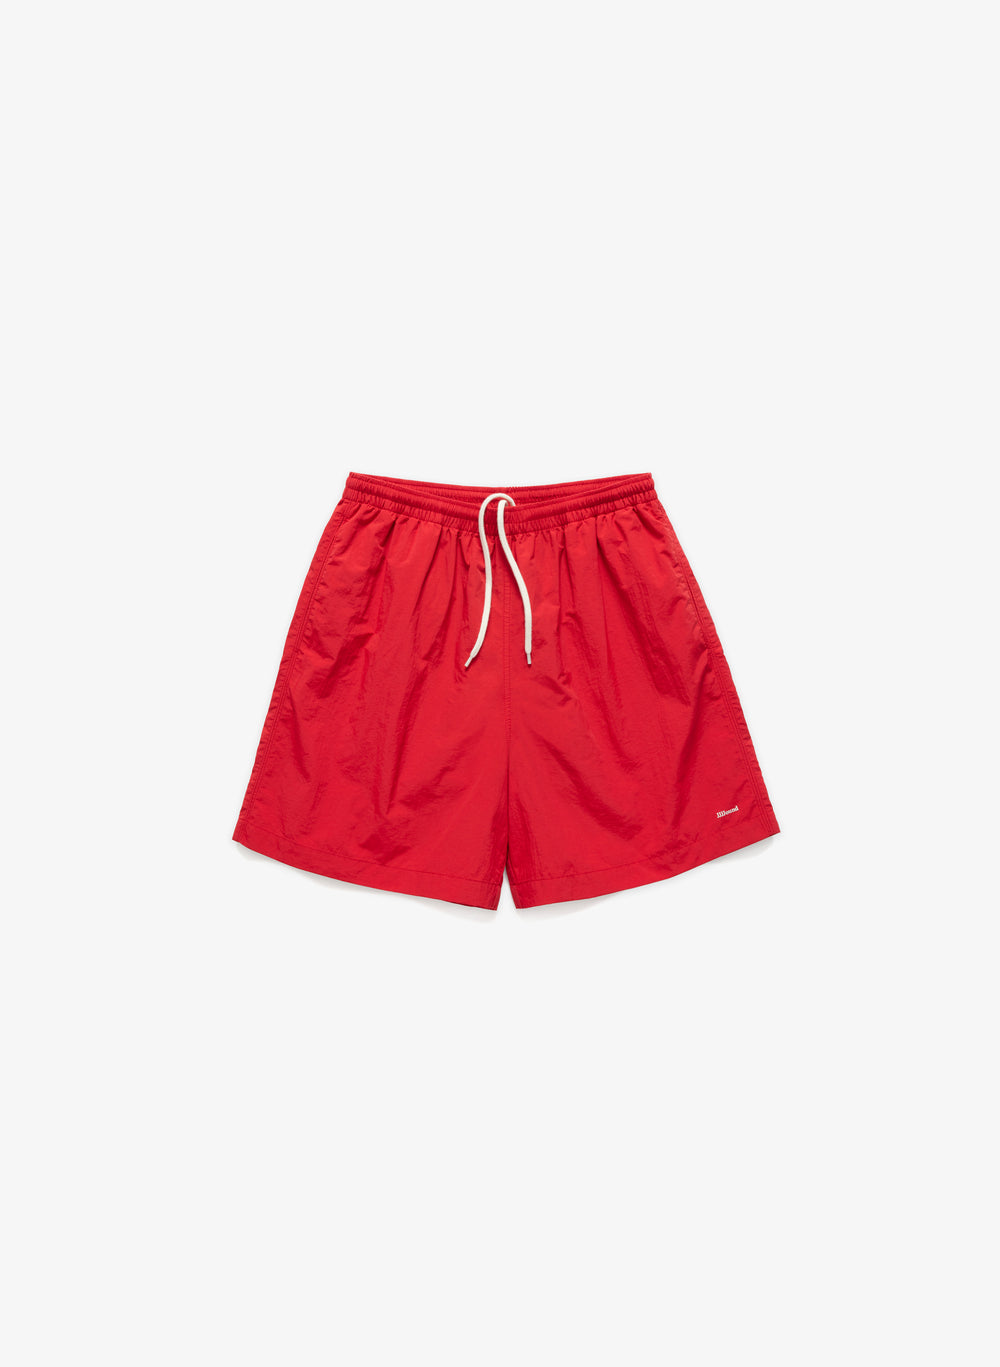 Camper Shorts - Red